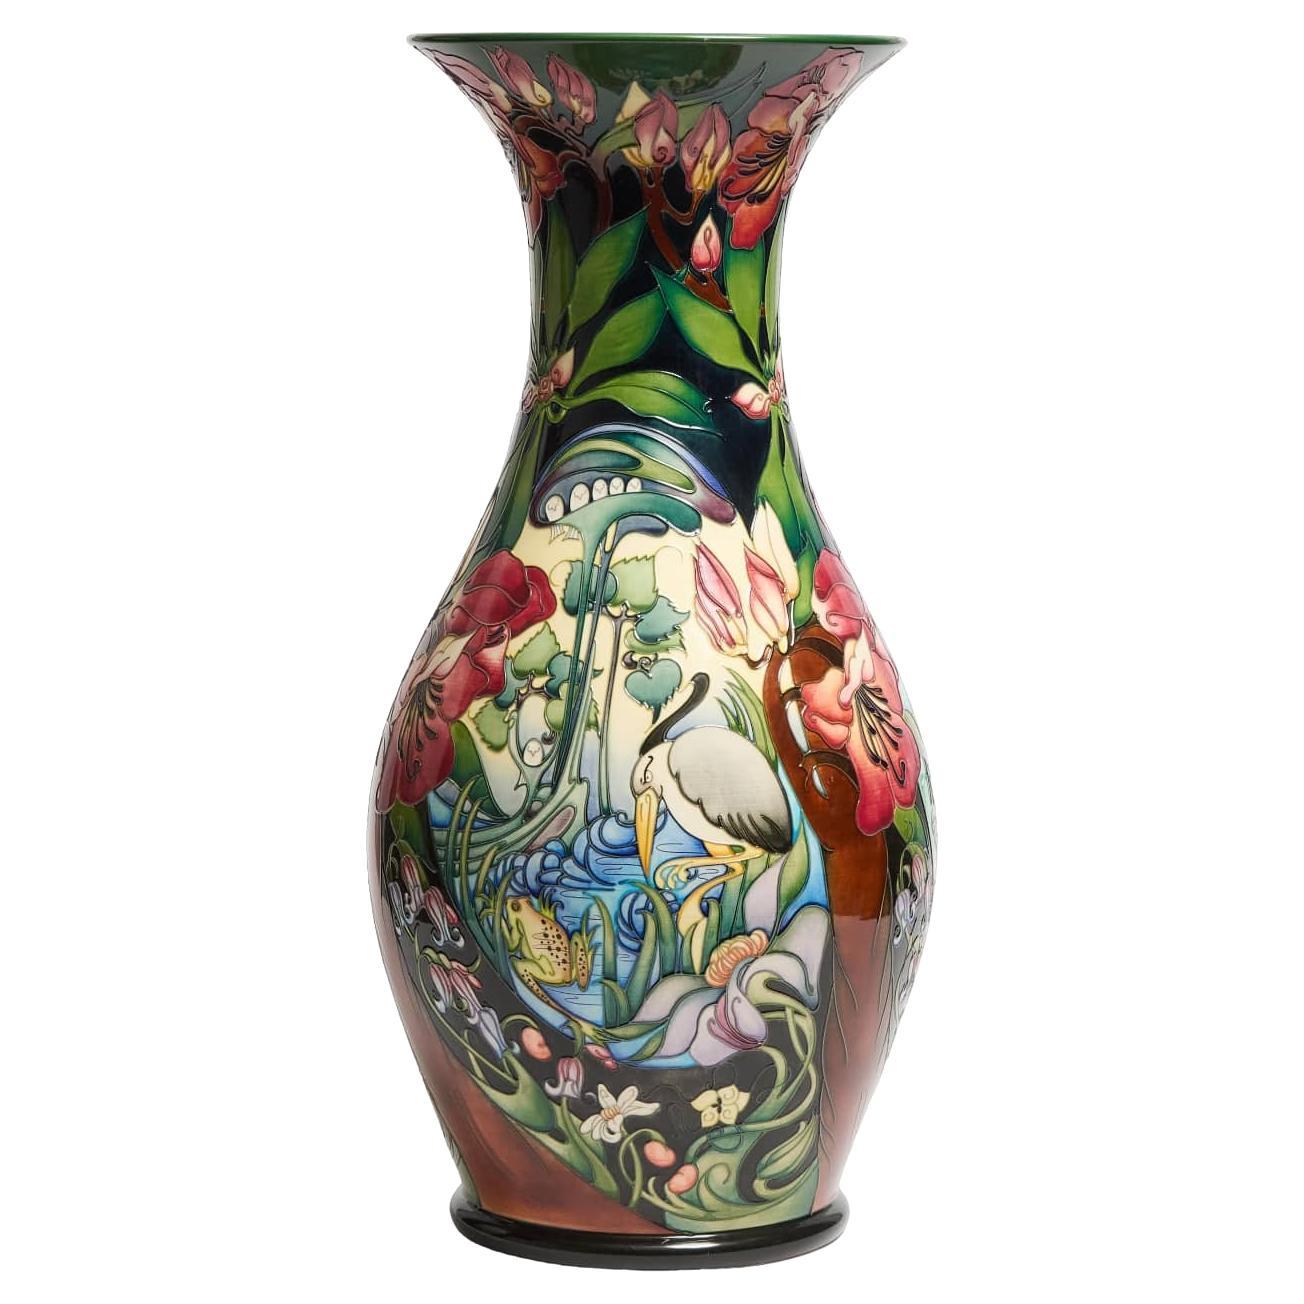 MOORCROFT "HIDDEN DREAMS" large vase designed by Emma Bossons 26/50 dated 2005